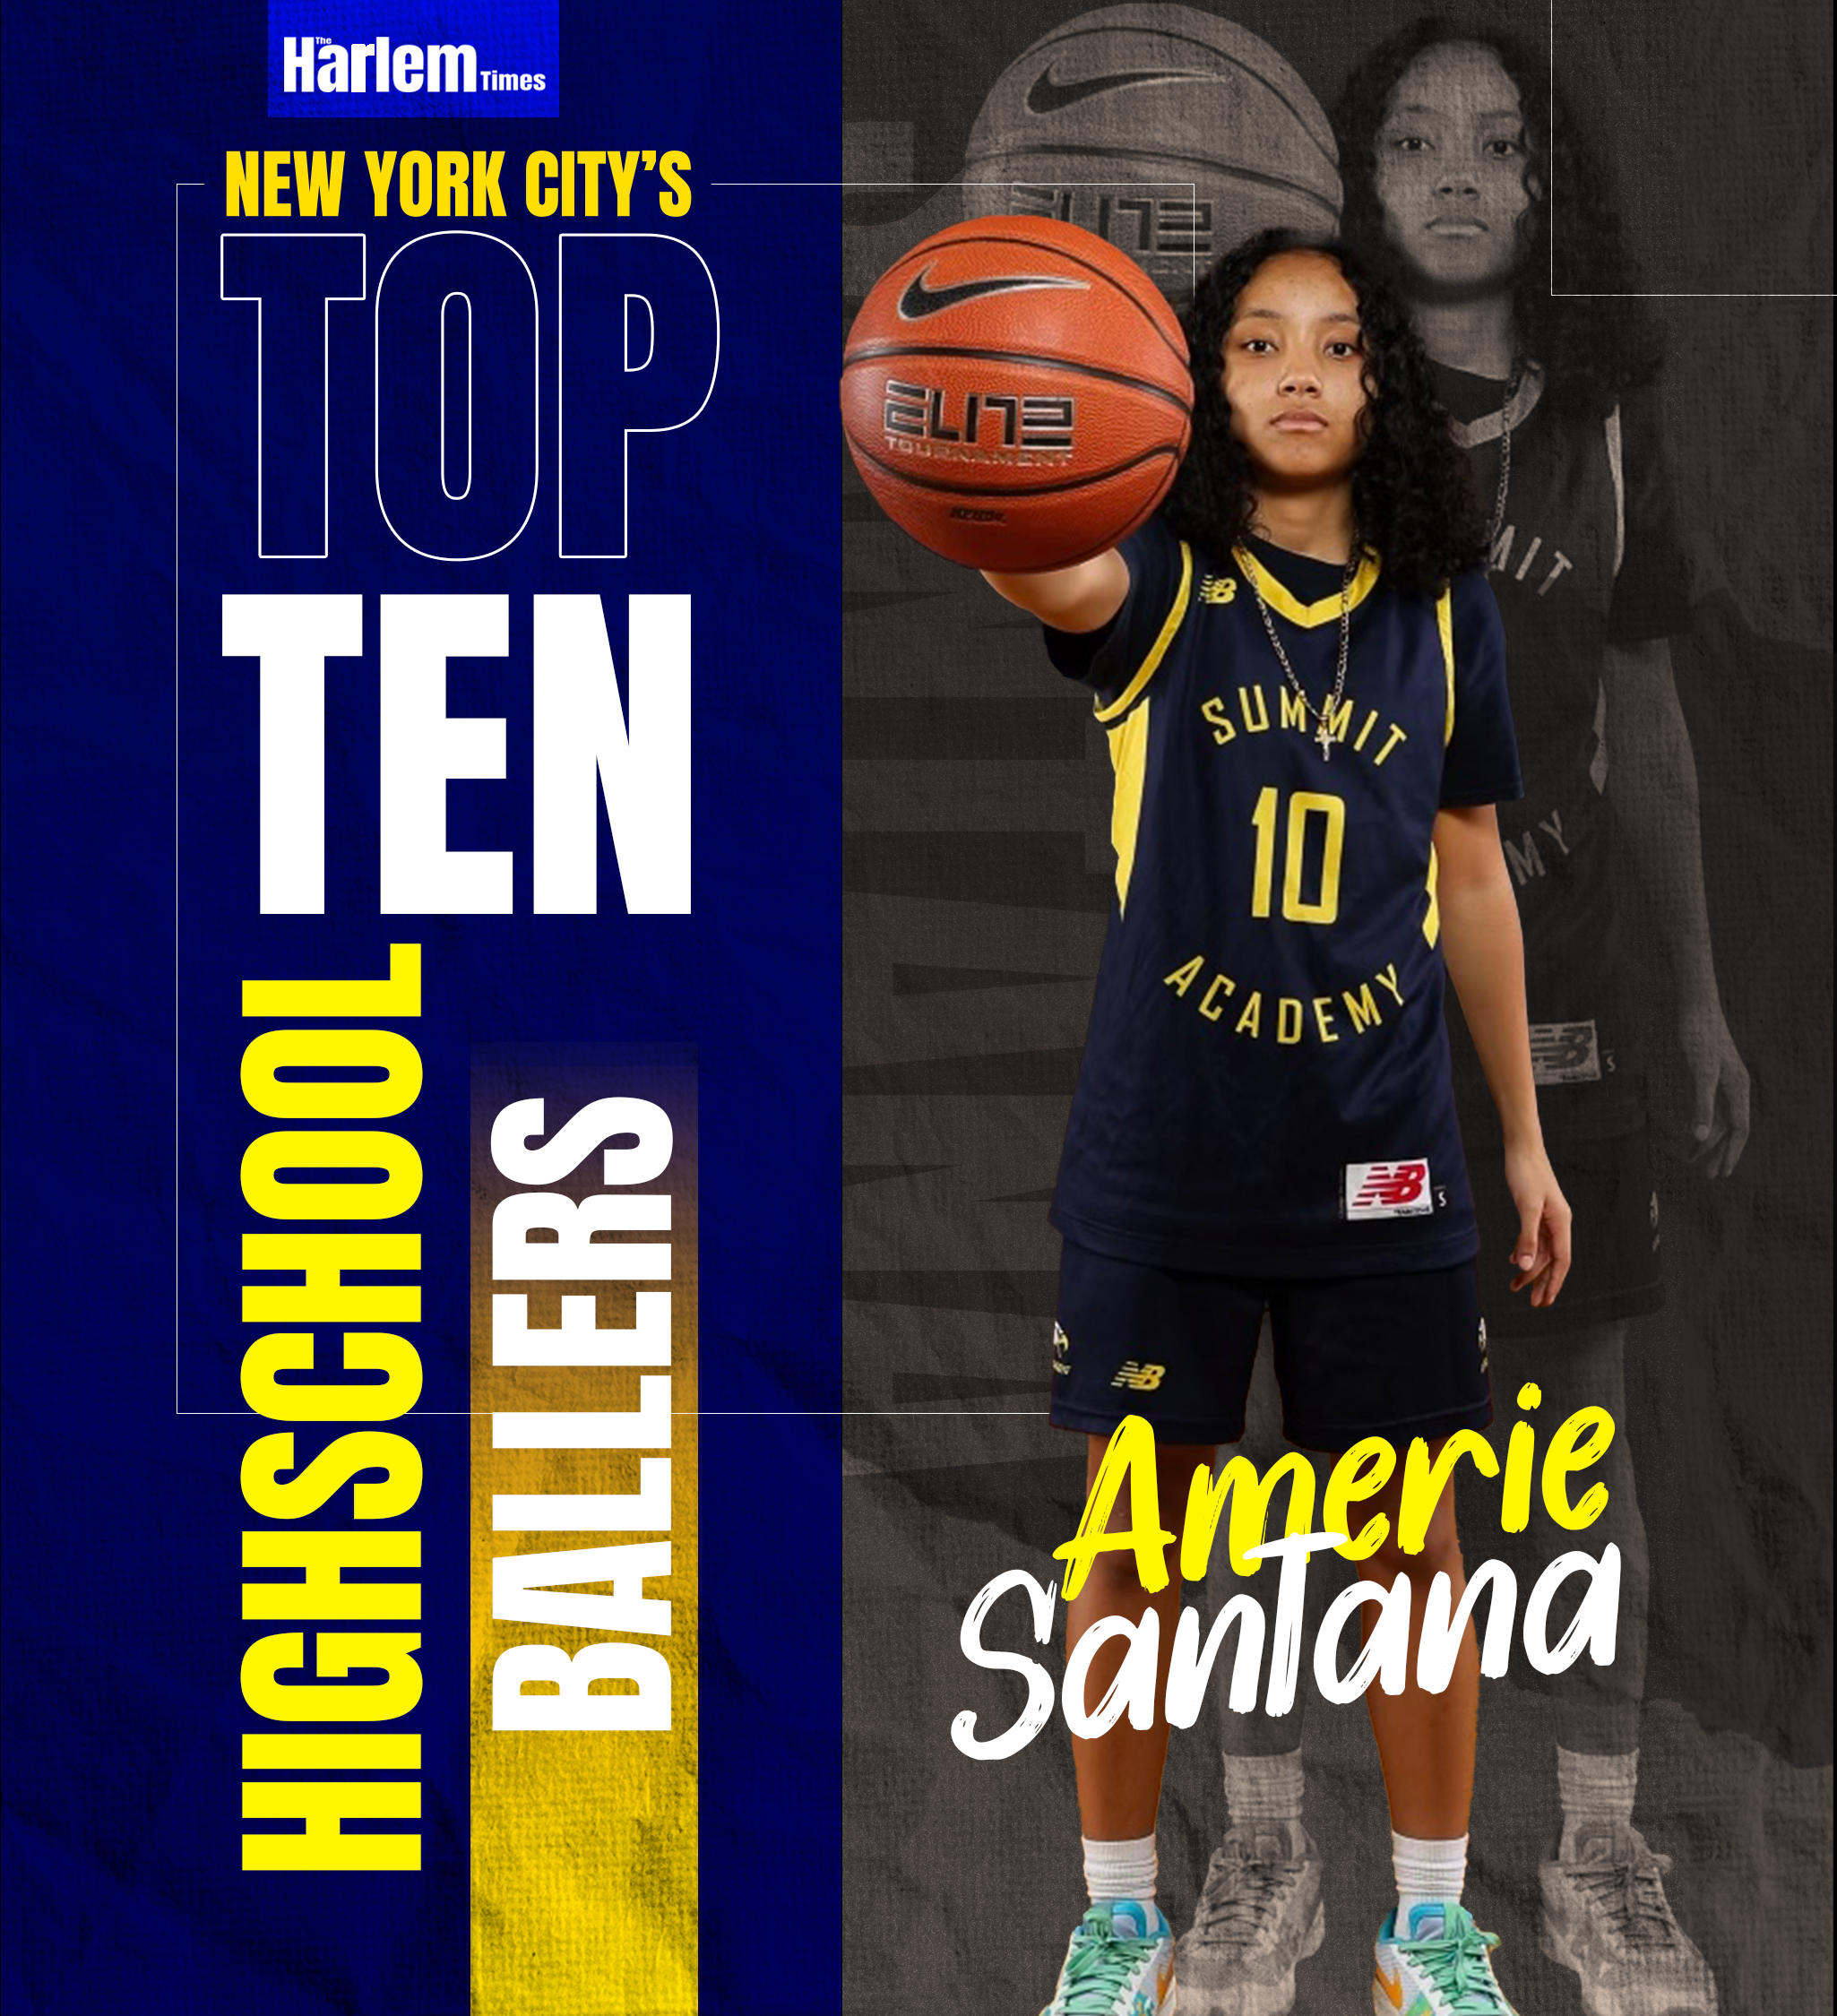 NYC’s Top Ten HS Ballers: Student-Athlete Amerie Santana